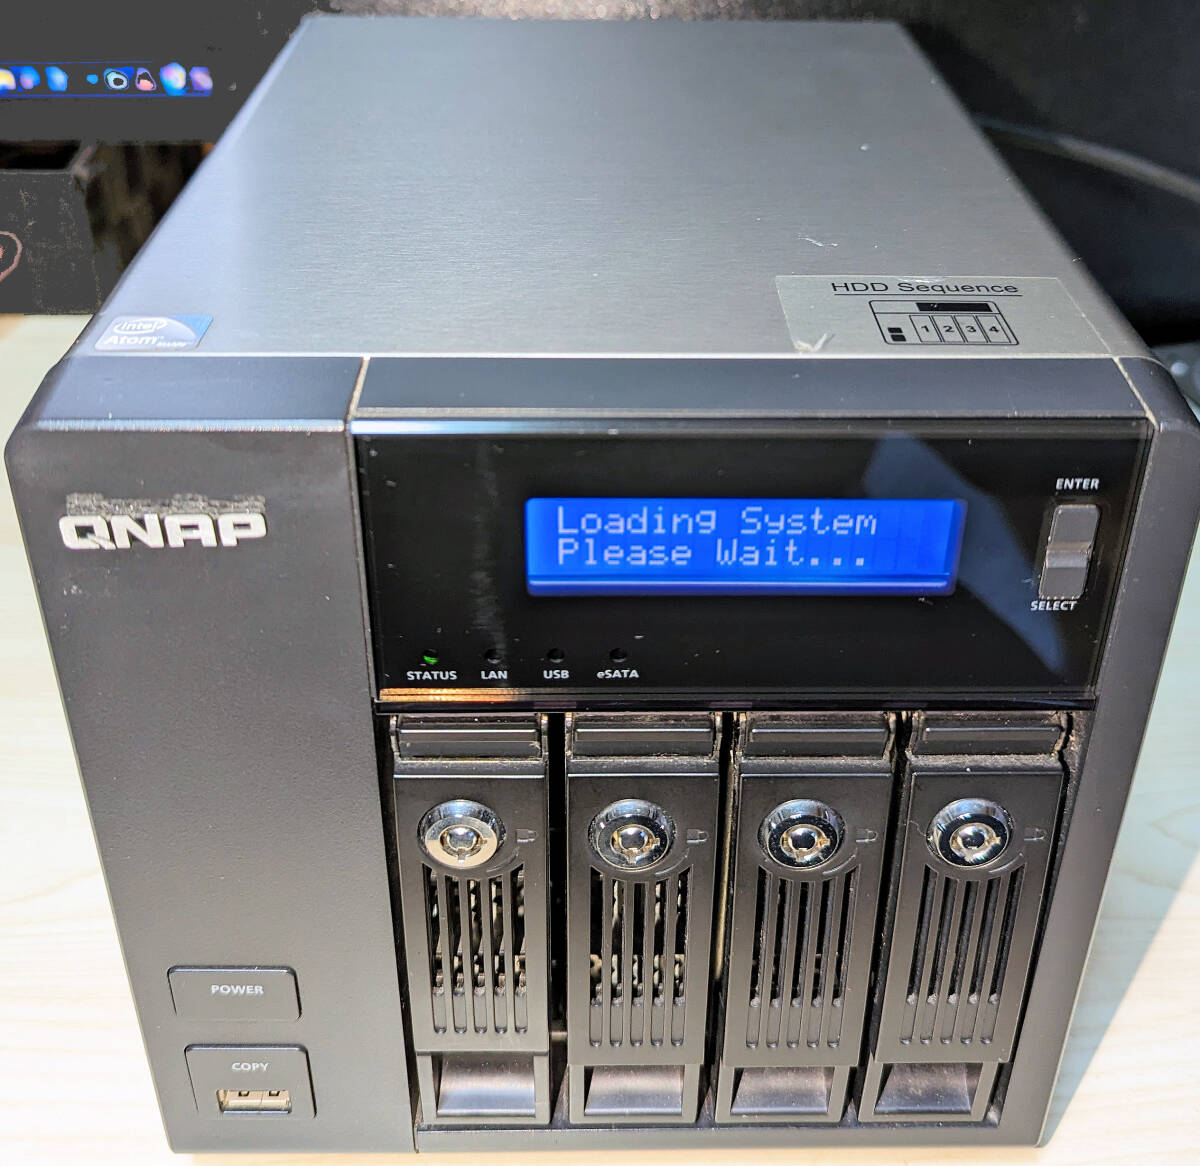 QNAP TS-459PRO SATA металл блок gigabit NAS